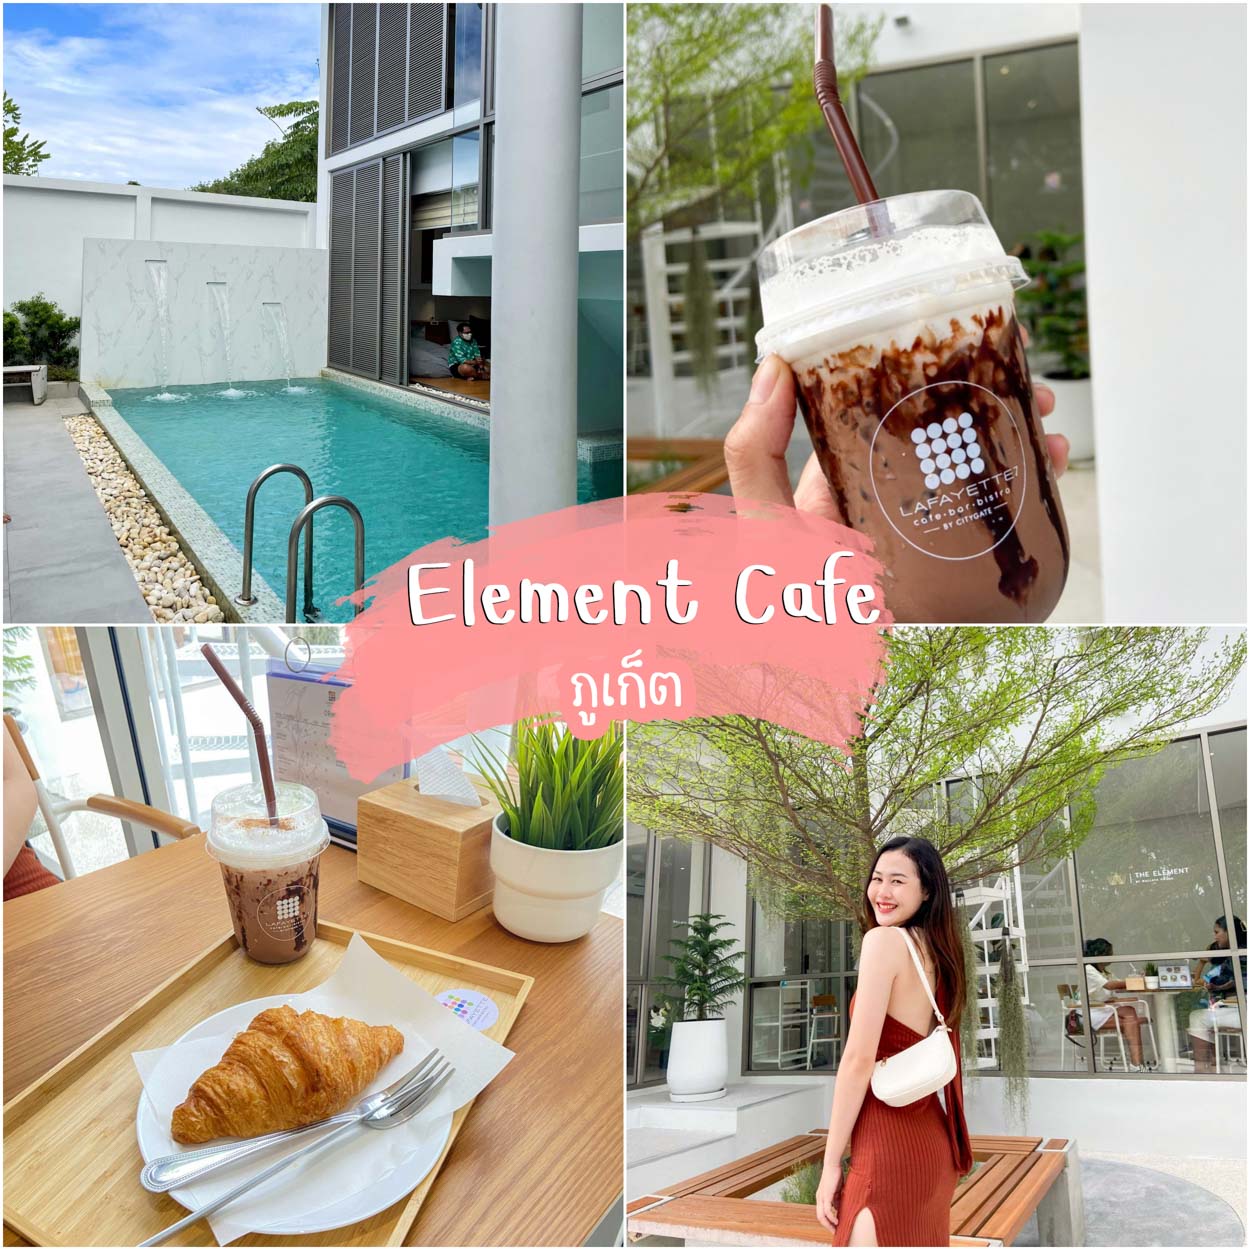 Element cafe by lafayette7 คาเฟ่ภูเก็ตเปิดใหม่ย่านป่าสักบางโจ คุมโทนสไตล์มินิมอล